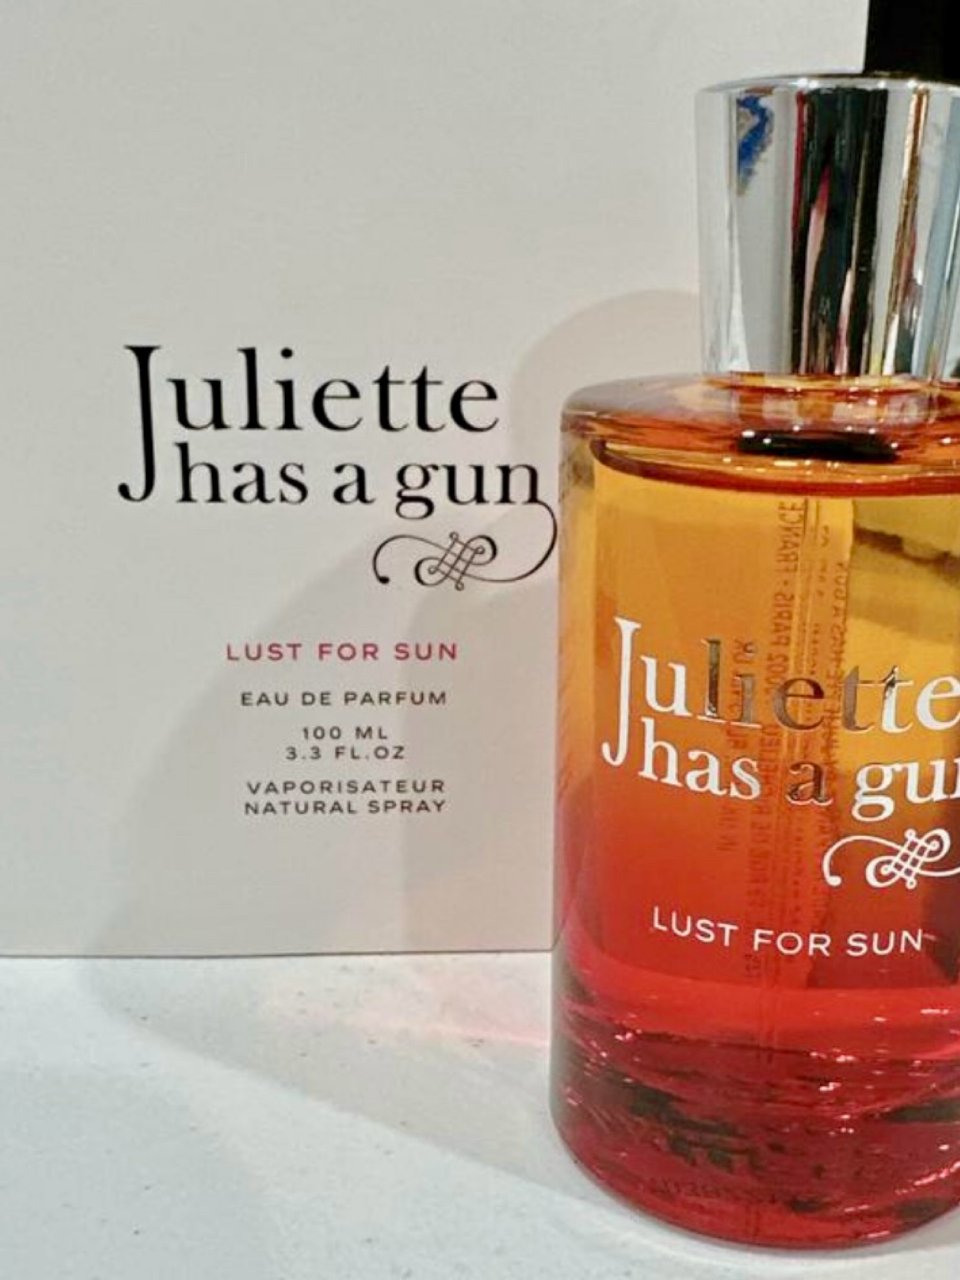 Lust For Sun Eau de Parfum - Juliette Has a Gun | Sephora